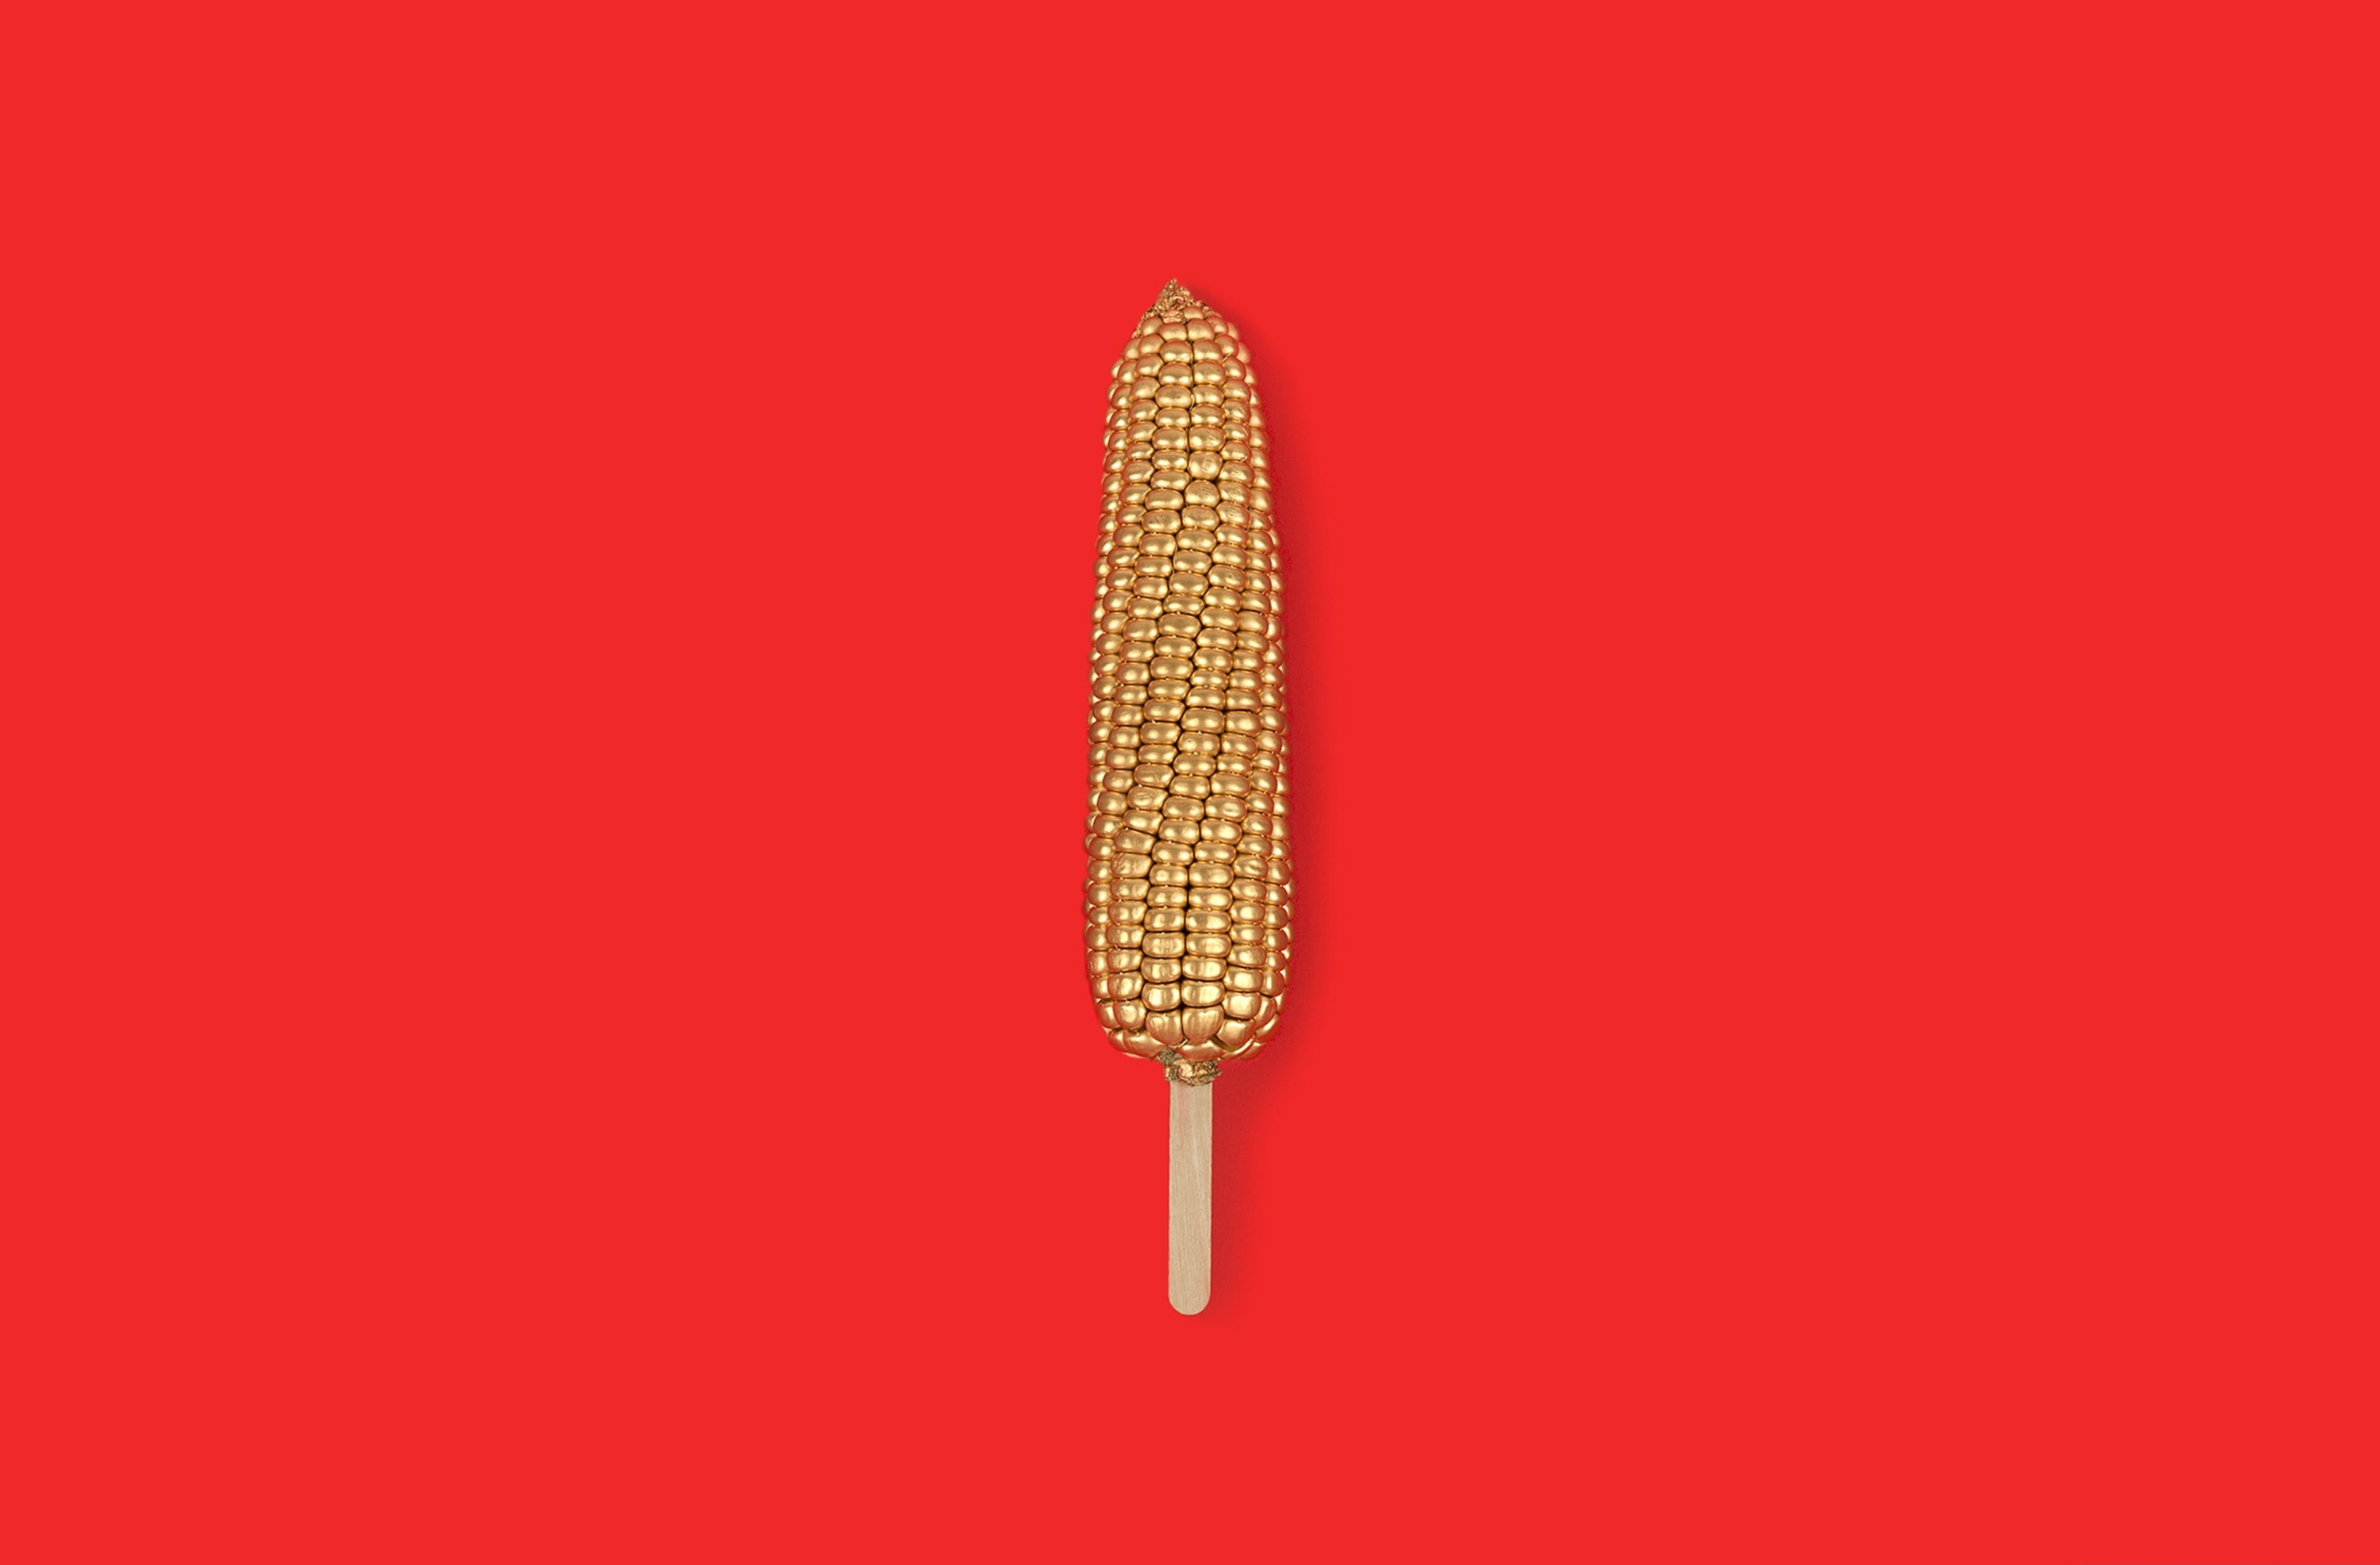 Golden Corn Stick, Food and Drink, Creative, Design, Background